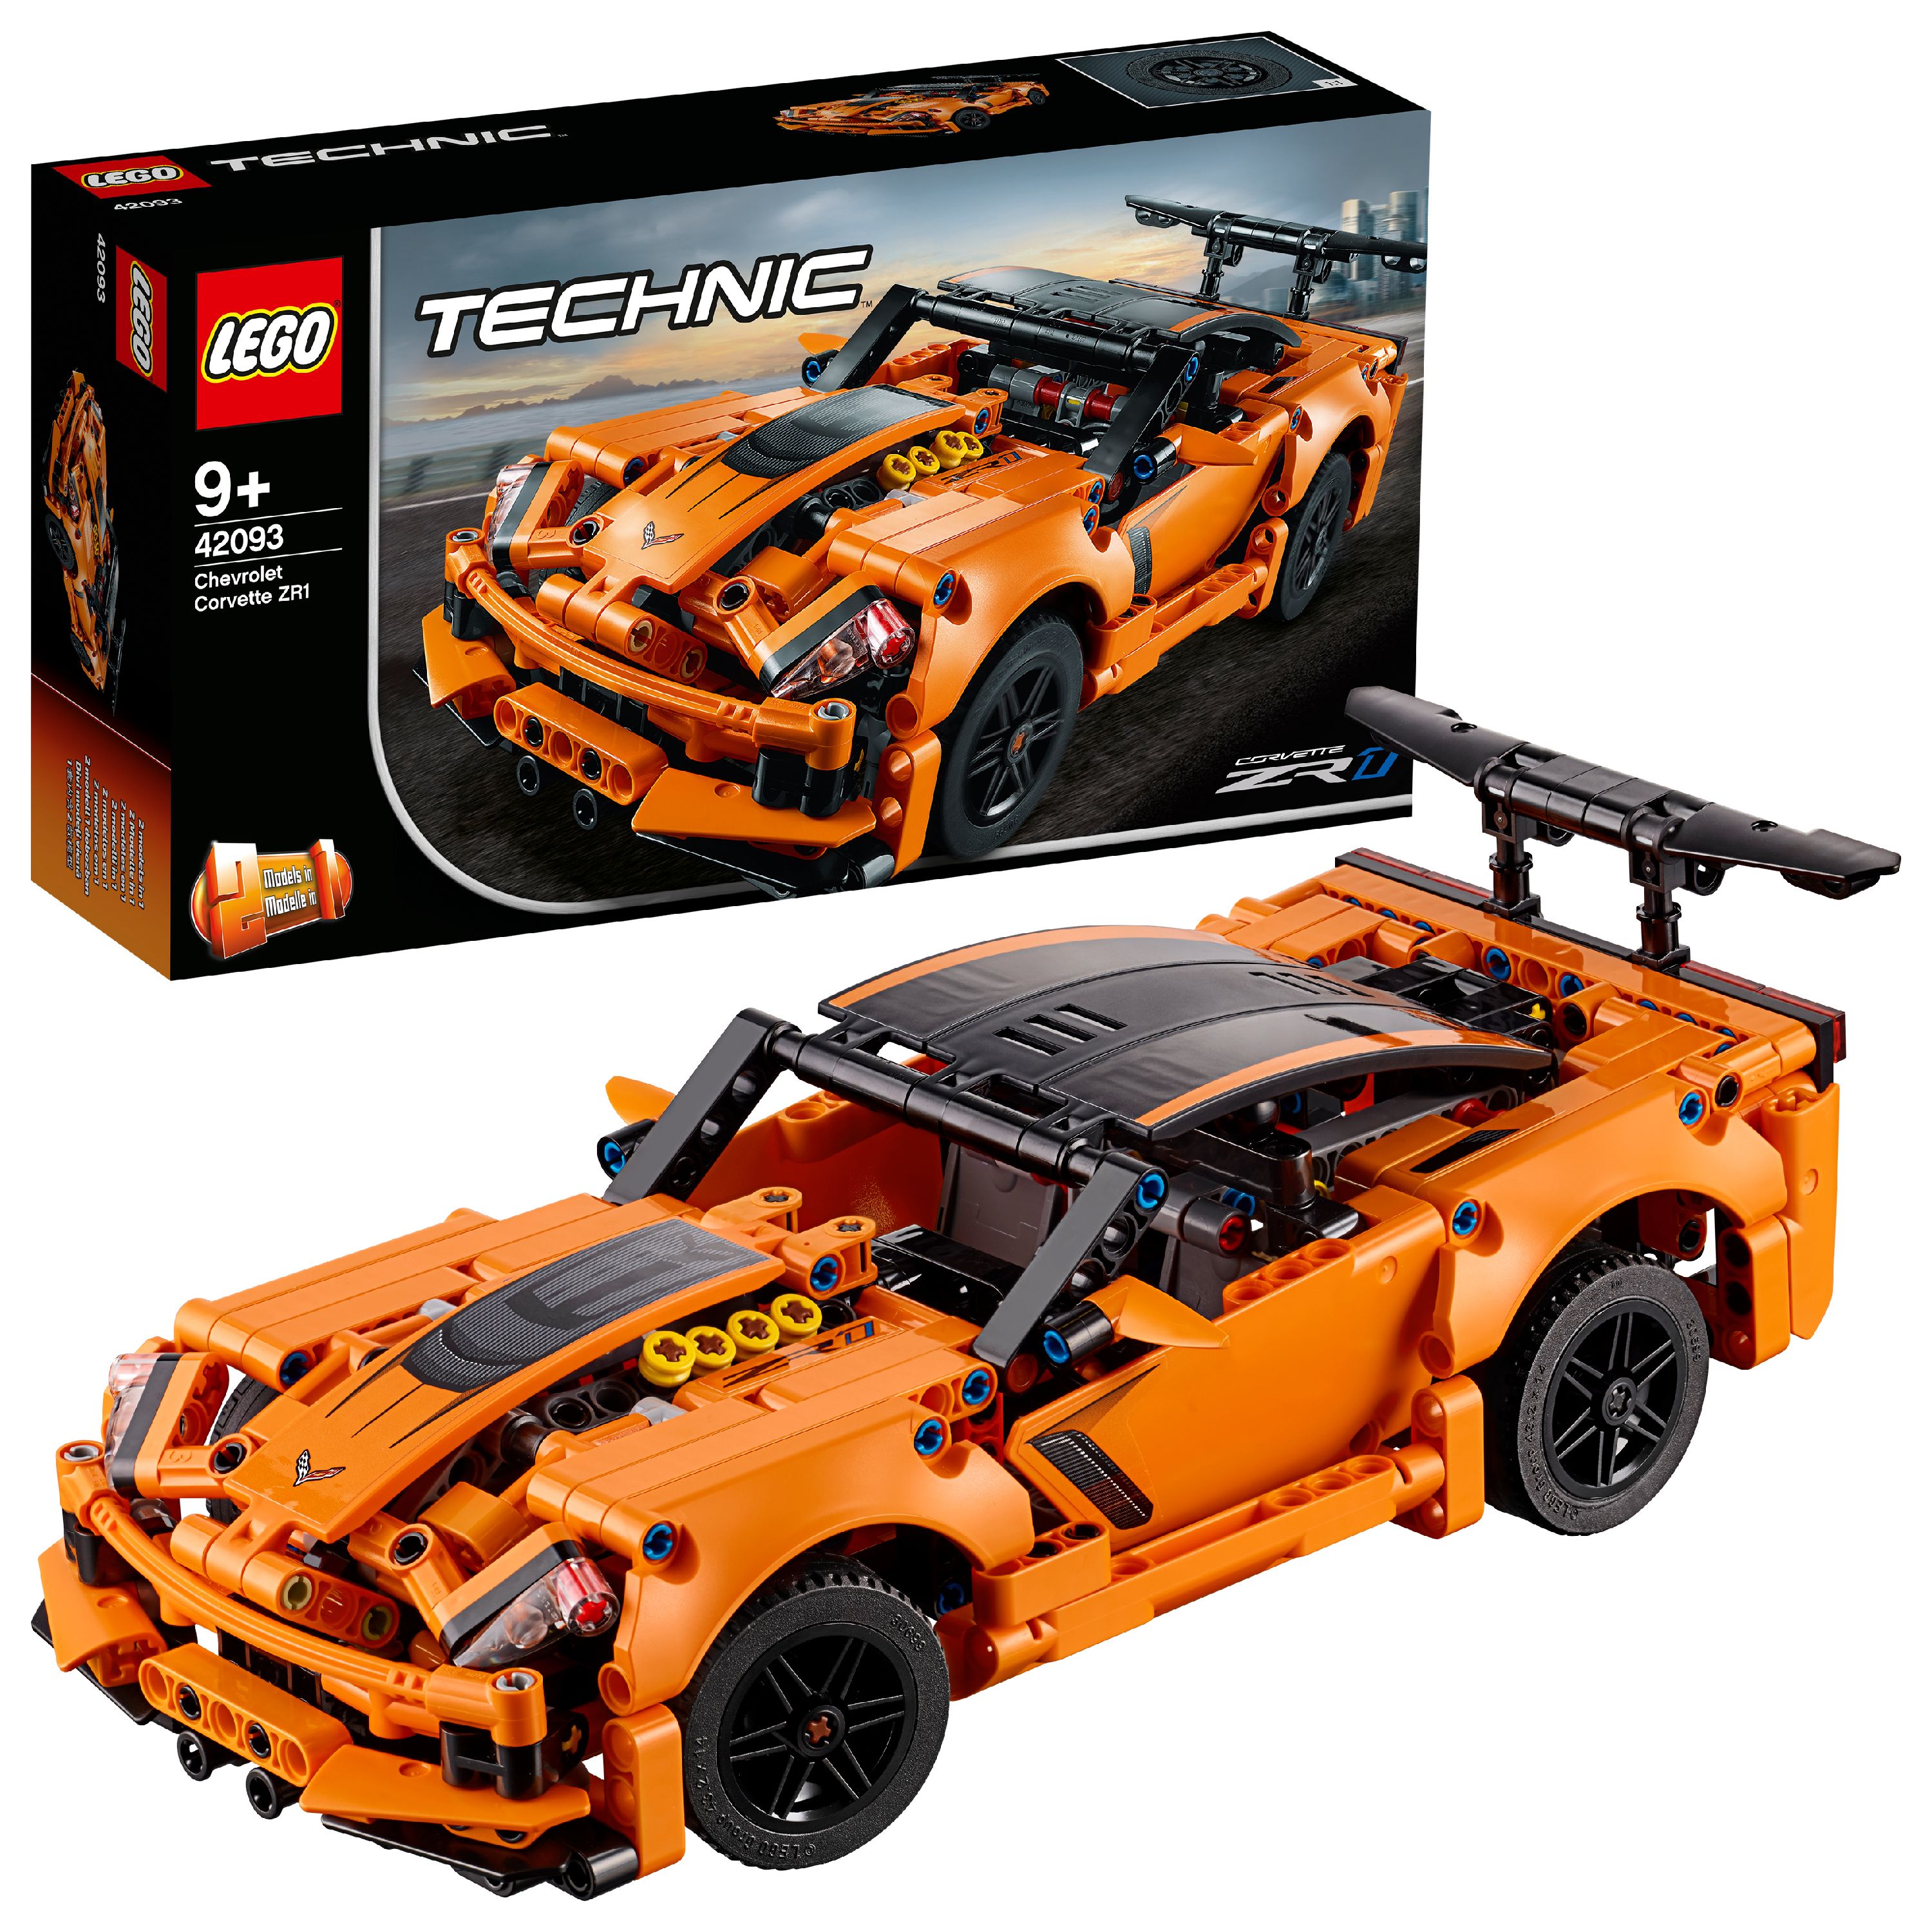 LEGO Technic Chevrolet Corvette ZR1 42093 Model Car Building Set - image 1 of 8